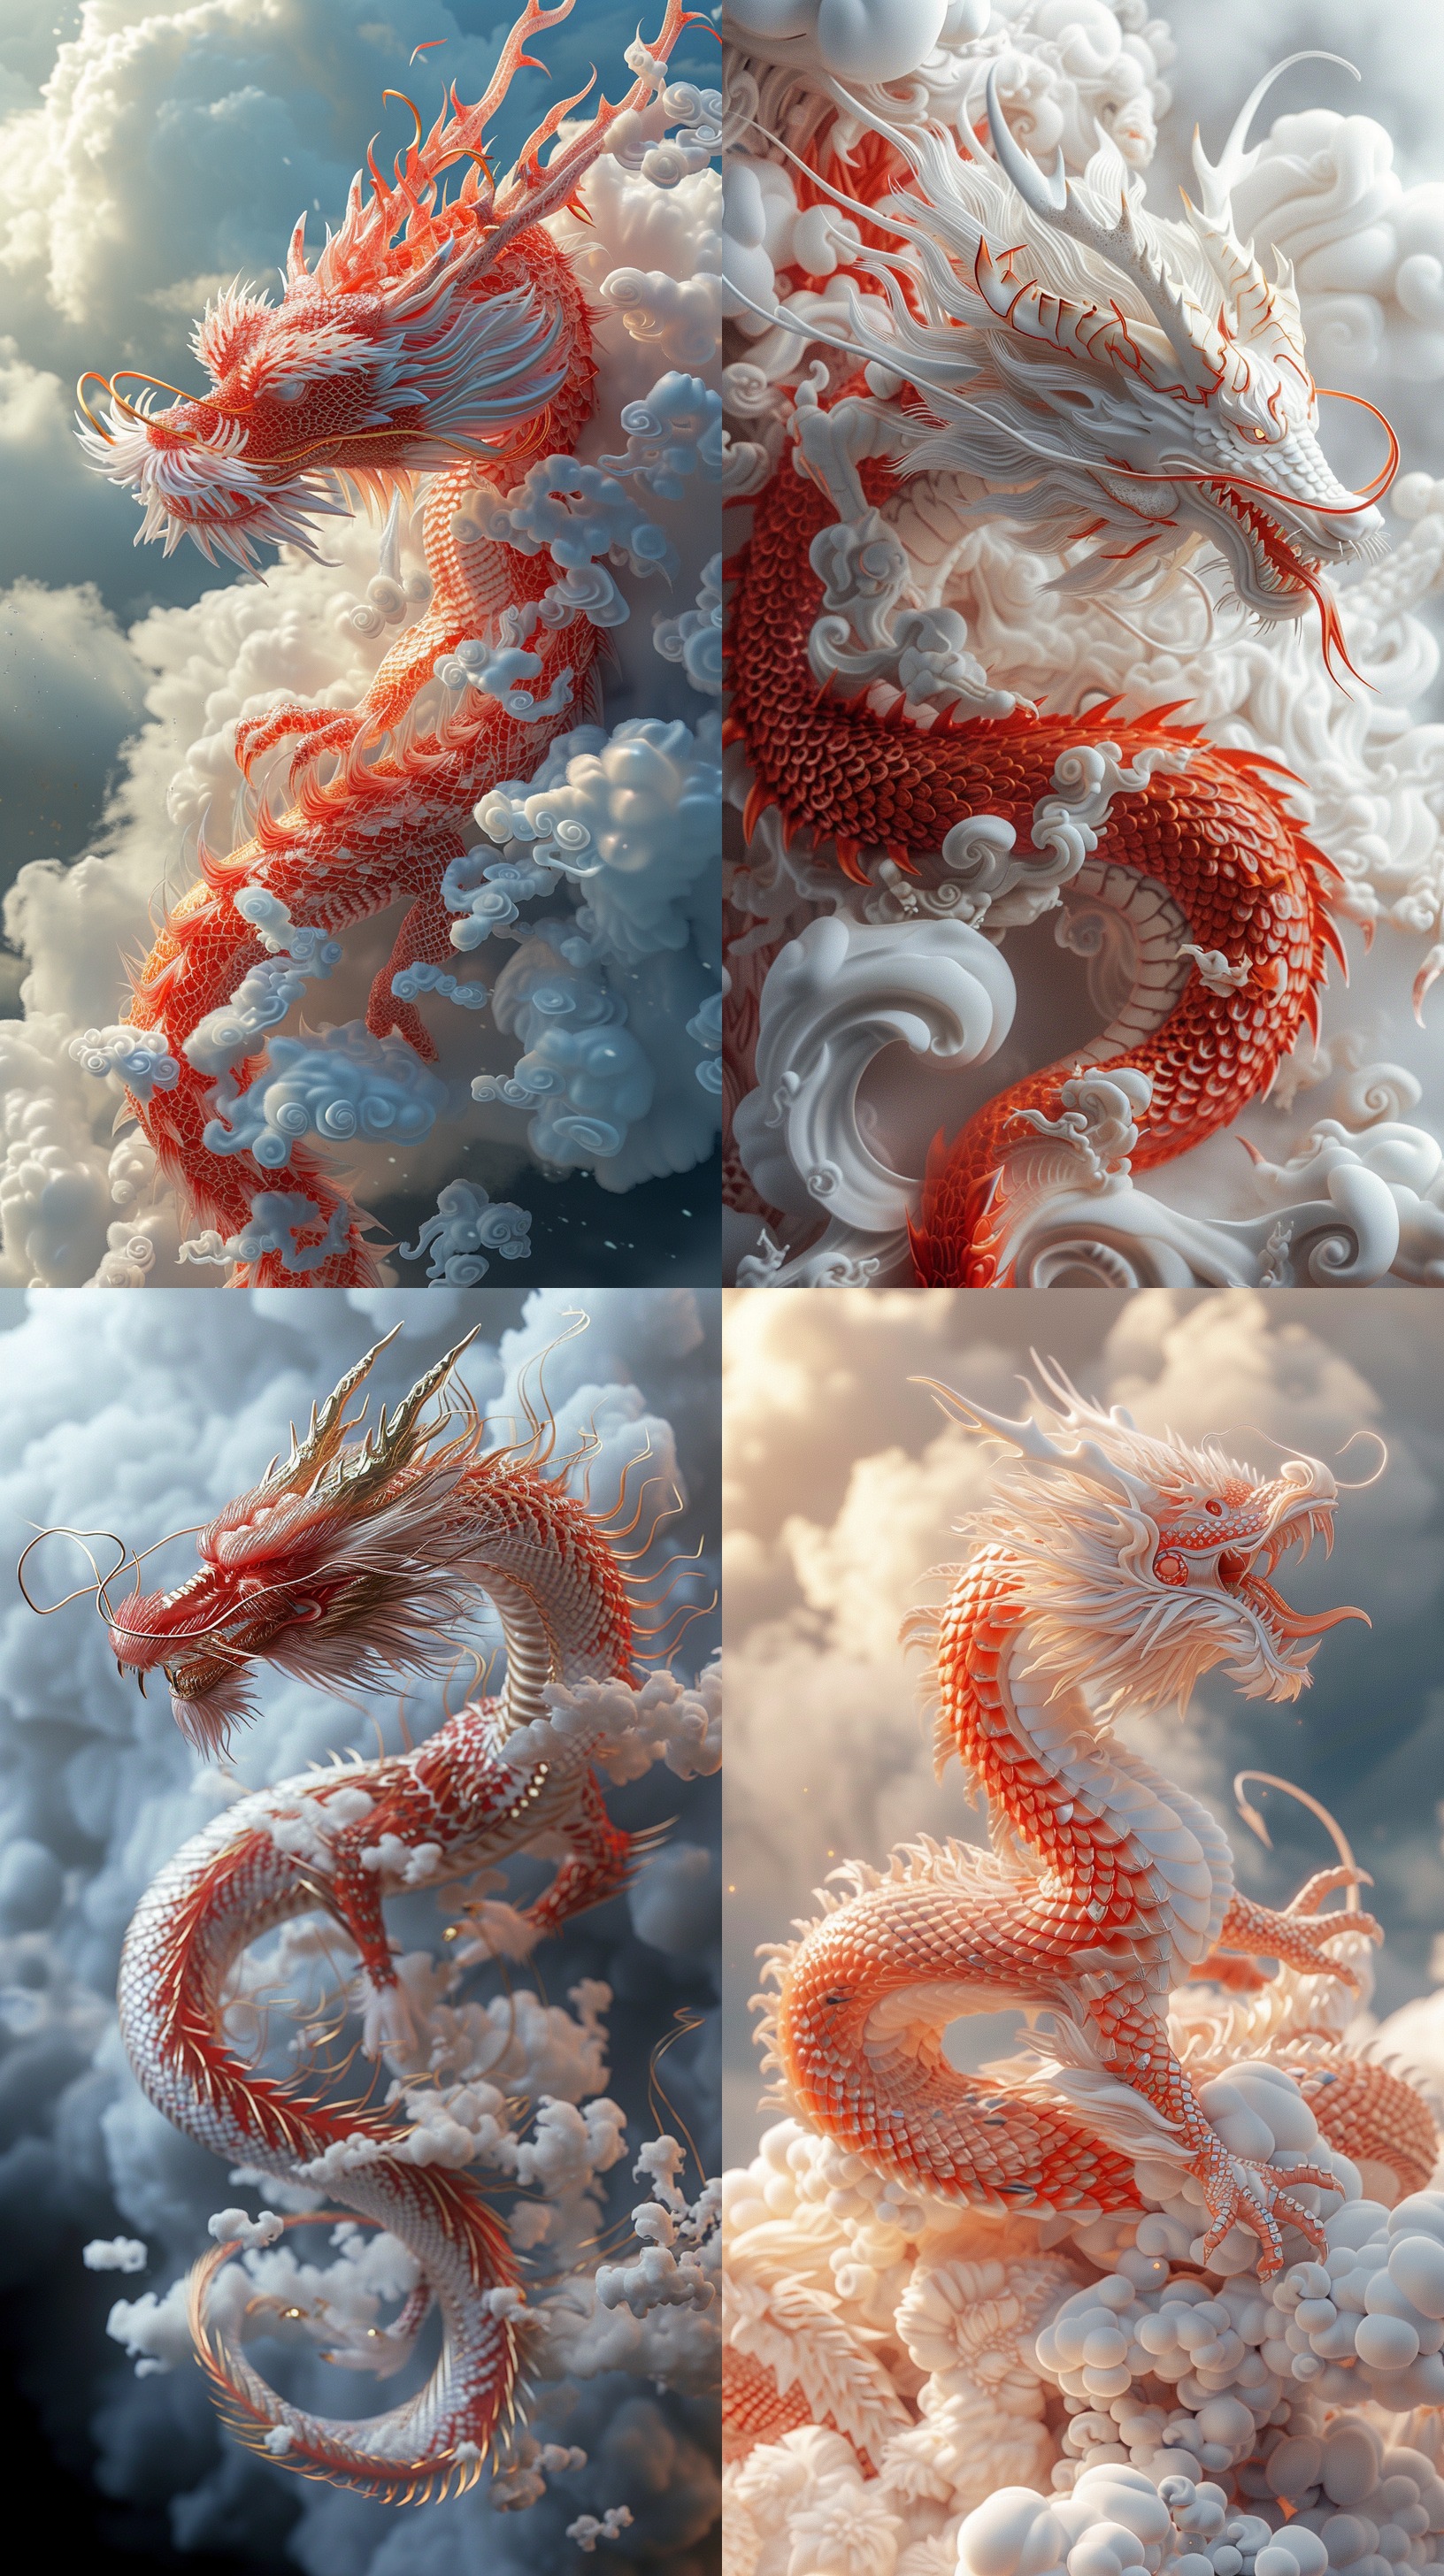 Red jade dragon between clouds